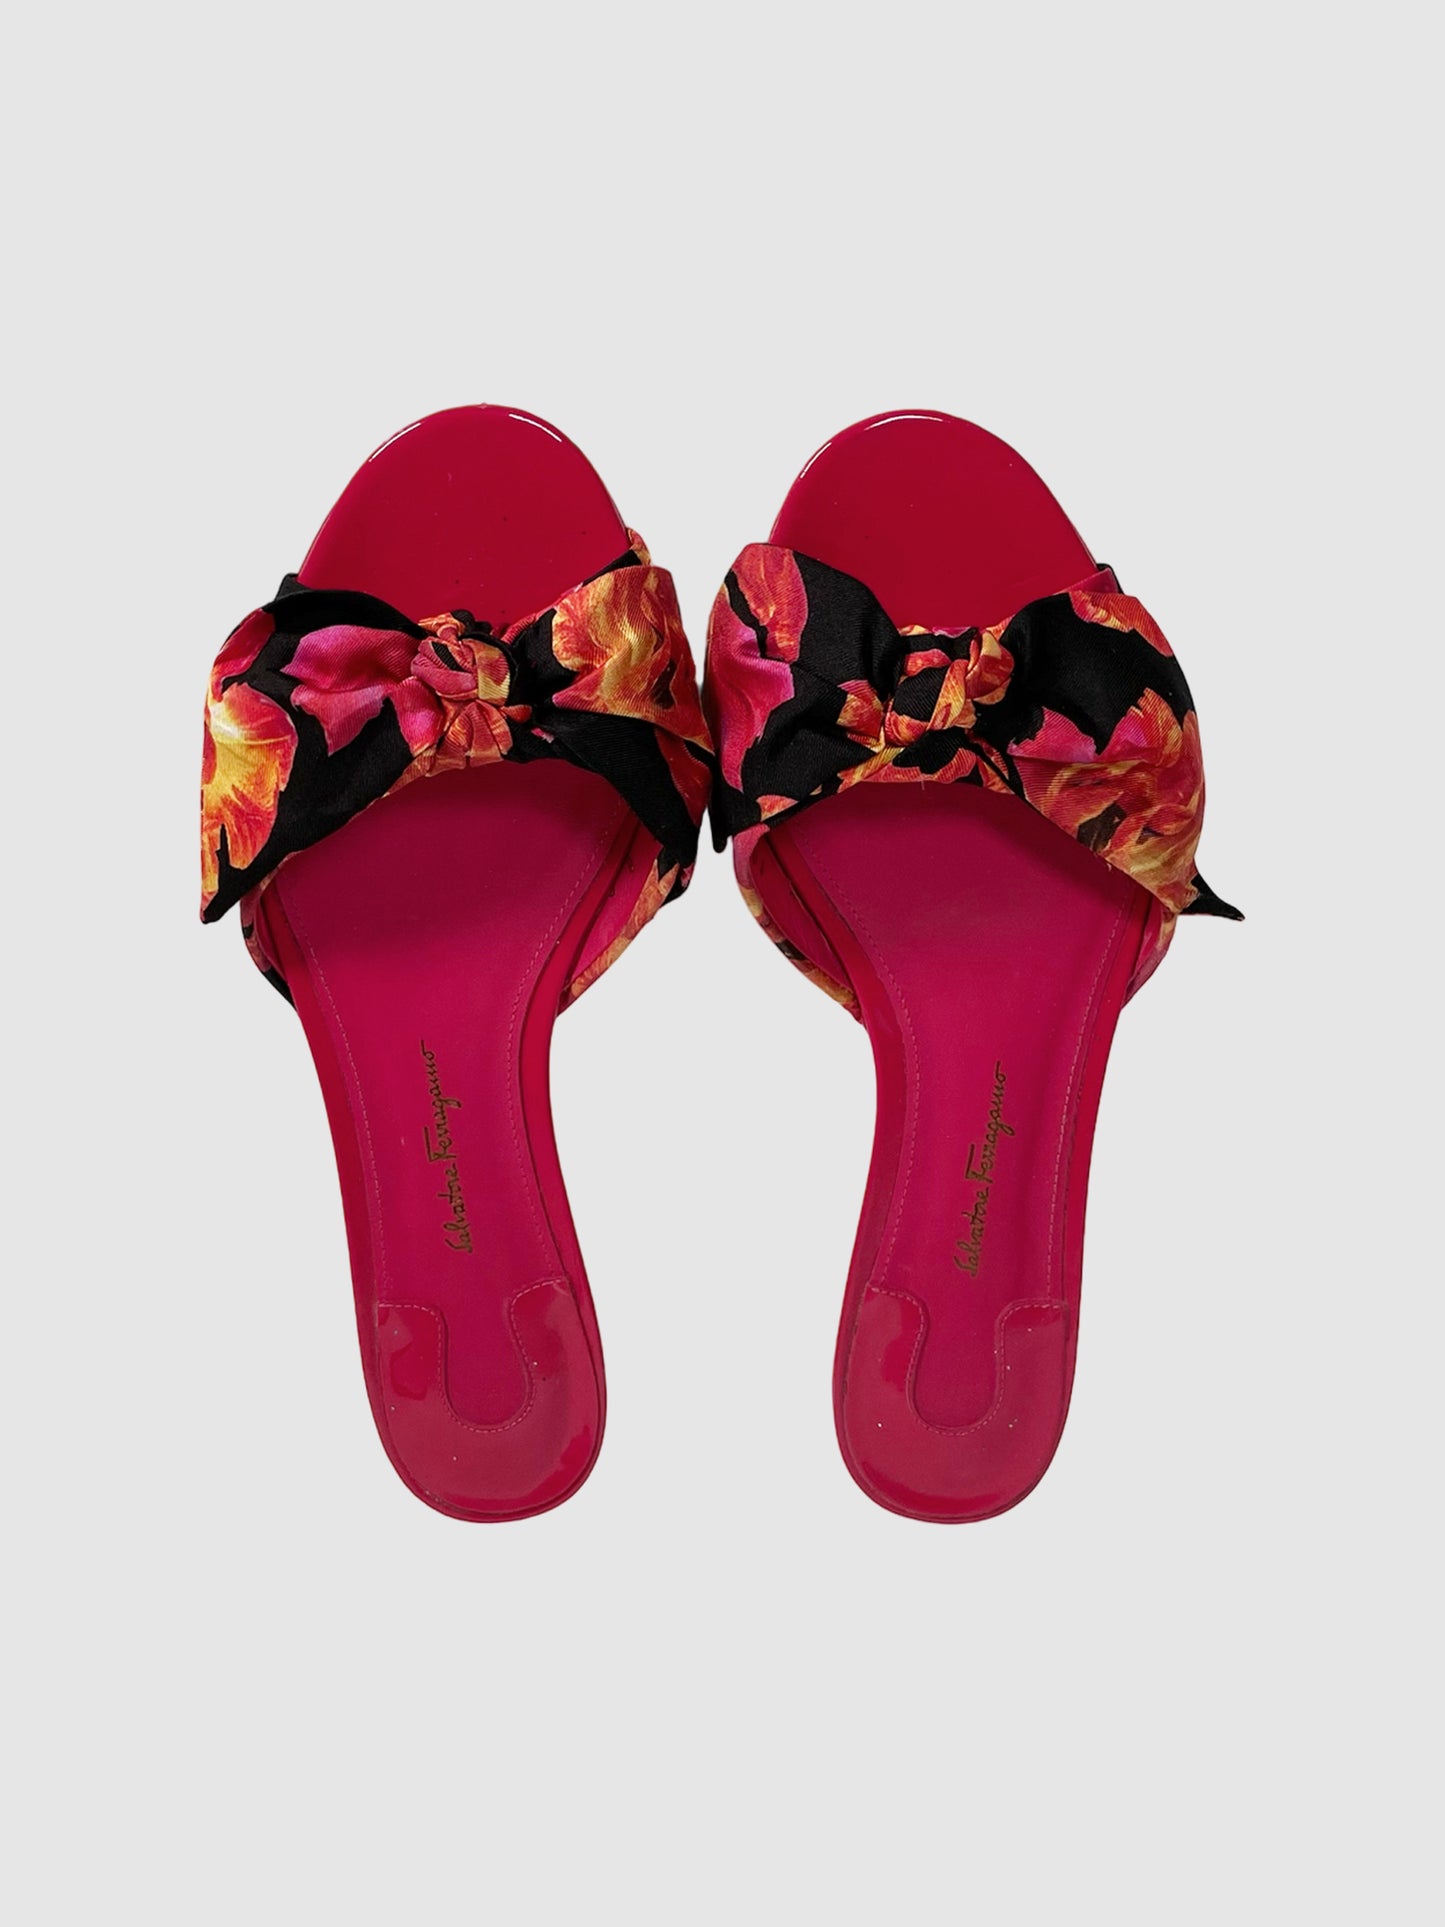 Salvatore Ferragamo 'Chianni' Floral Print Silk Slide Sandals - Size 7